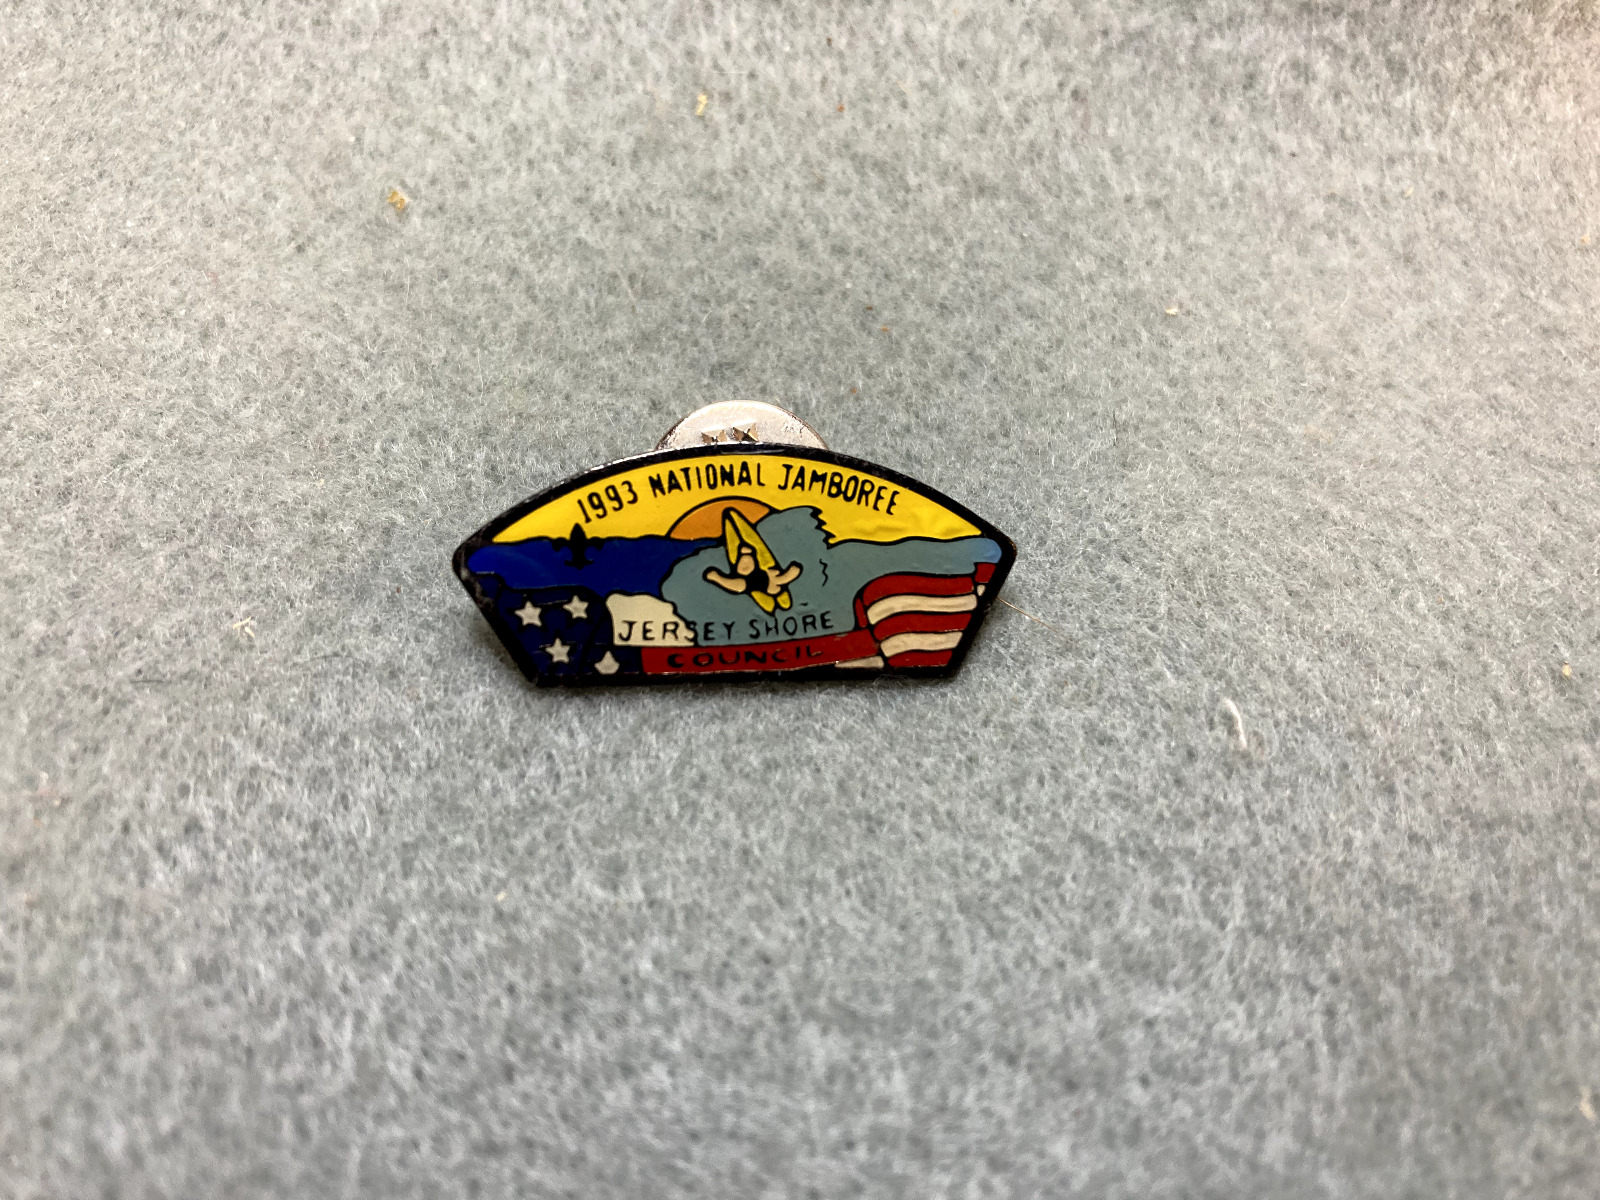 (mr13) Boy Scouts-   1993 National Jamboree pin - Jersey Shore Council